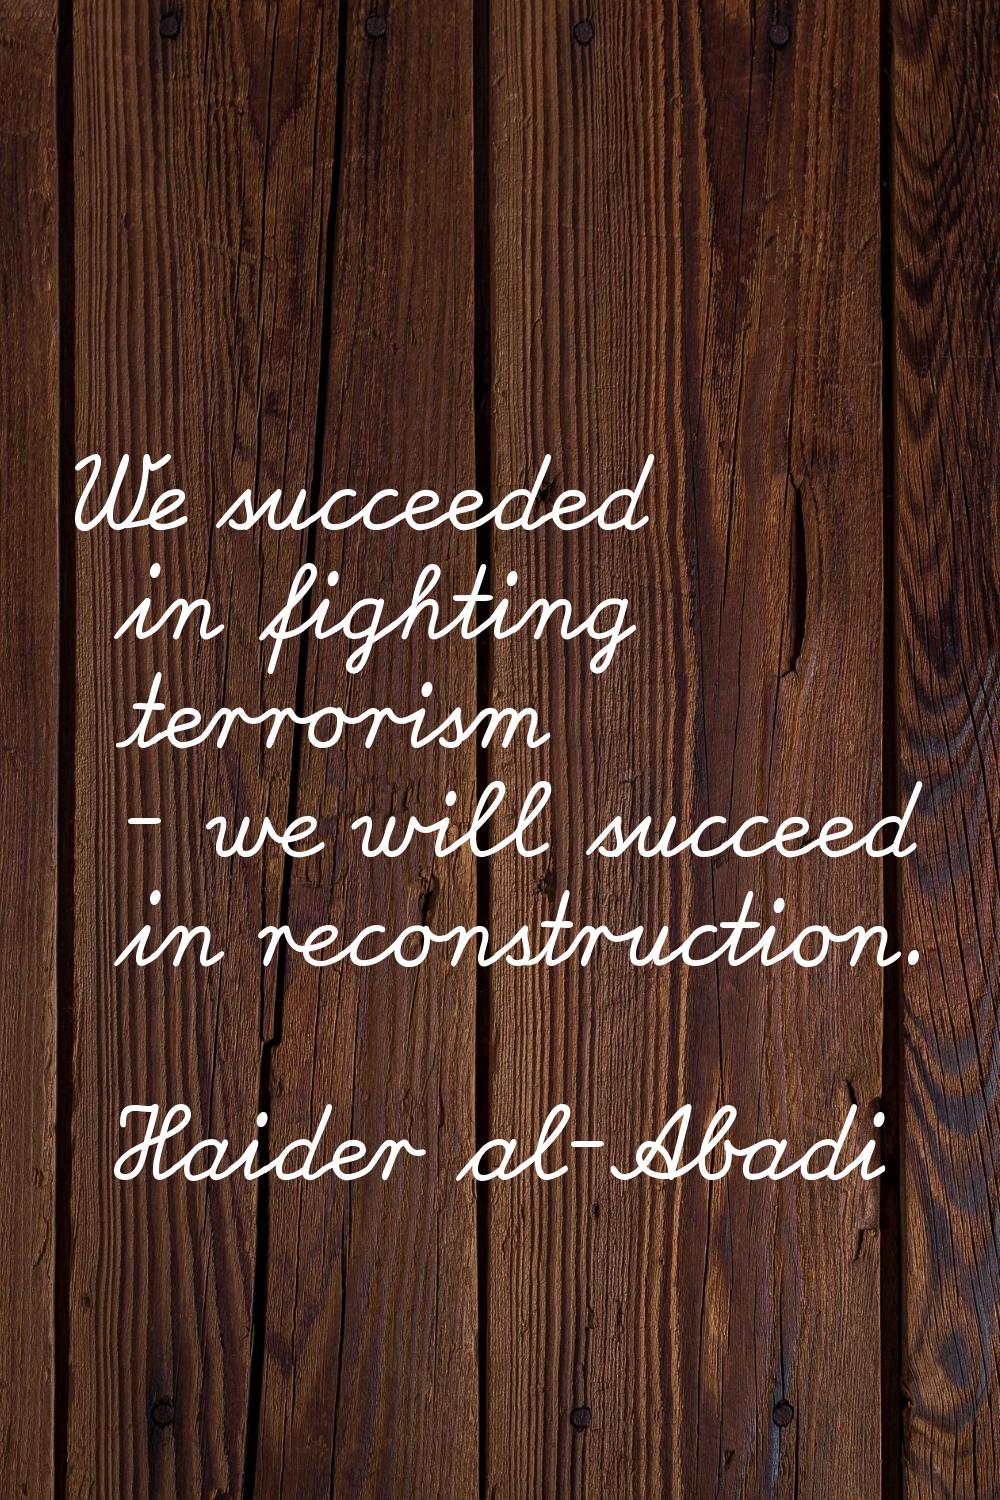 We succeeded in fighting terrorism - we will succeed in reconstruction.